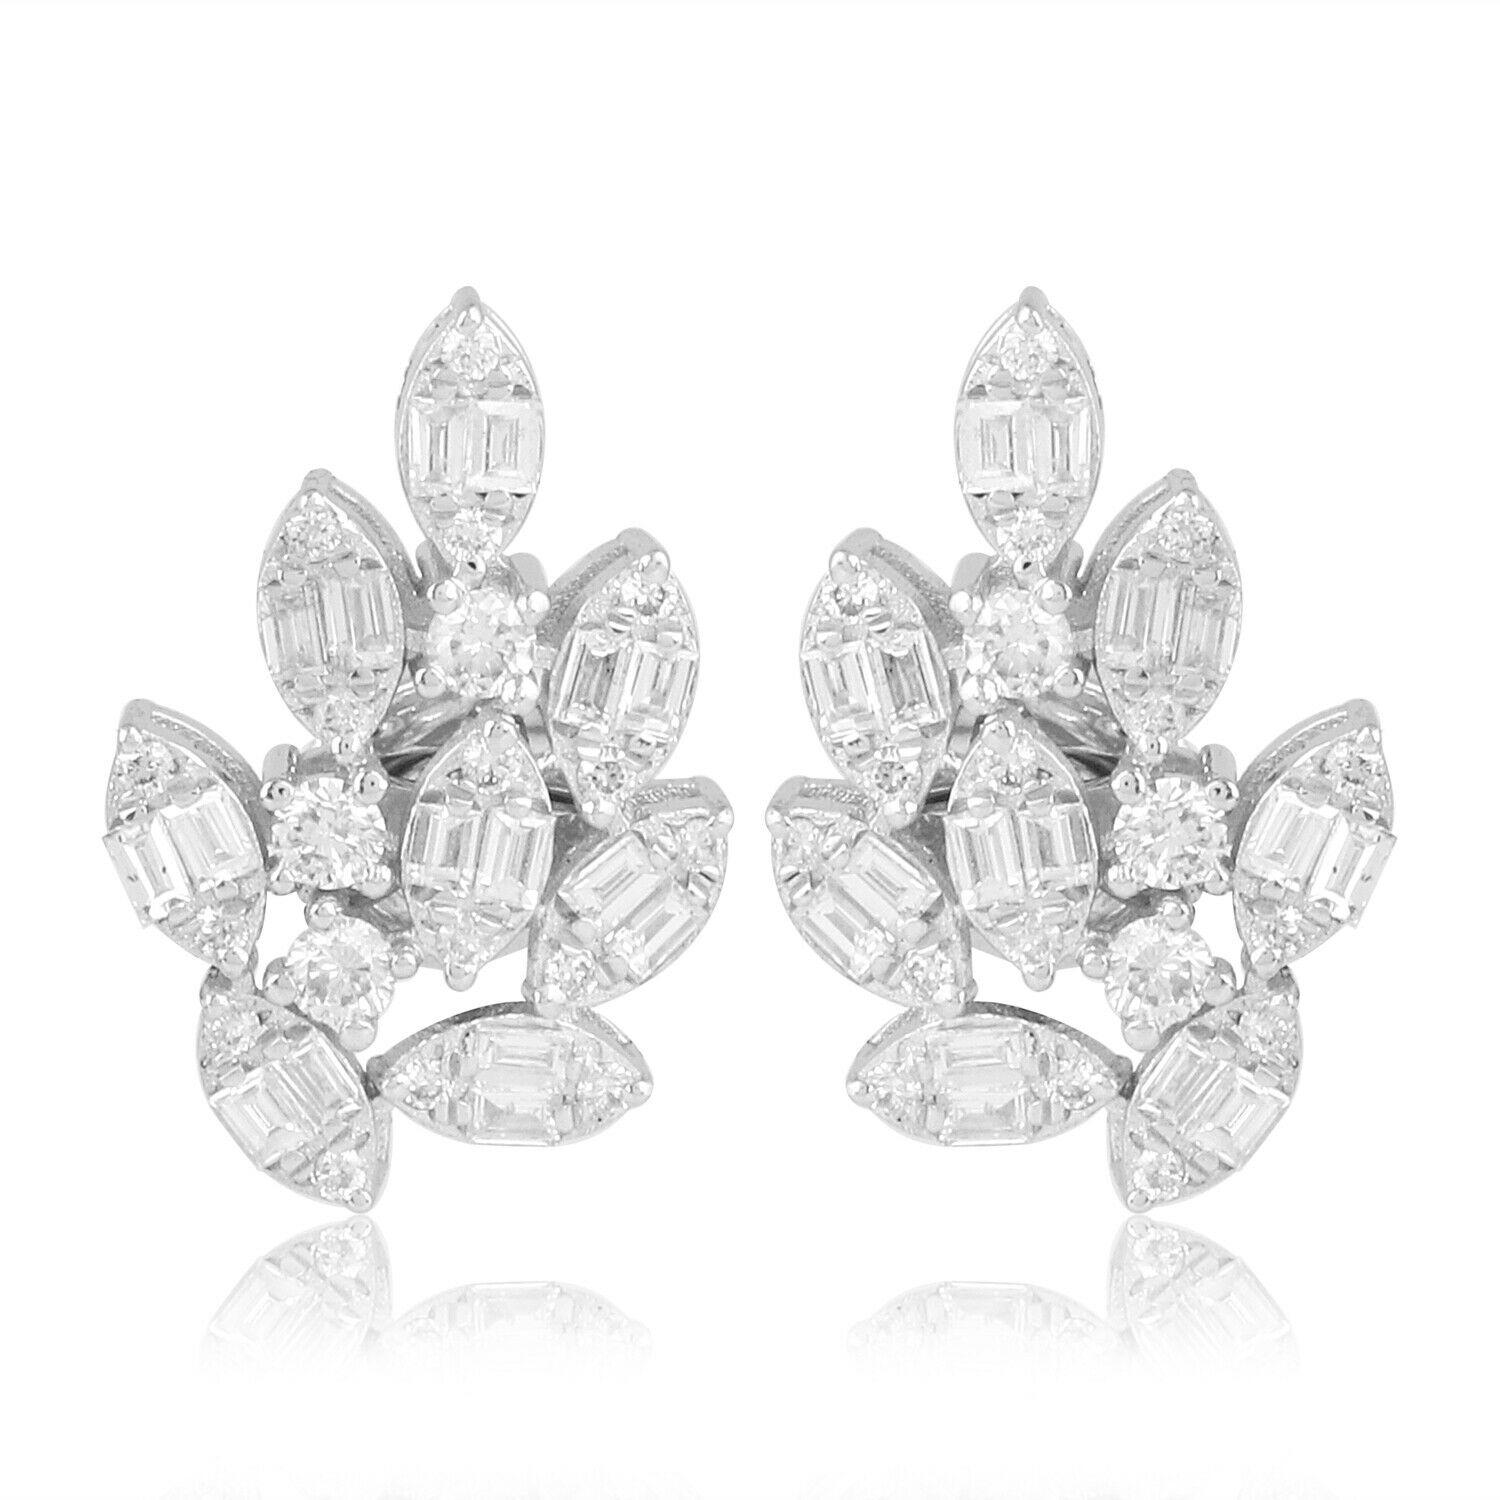 Mixed Cut 18 Karat White Gold Diamond Cluster Stud Earrings For Sale